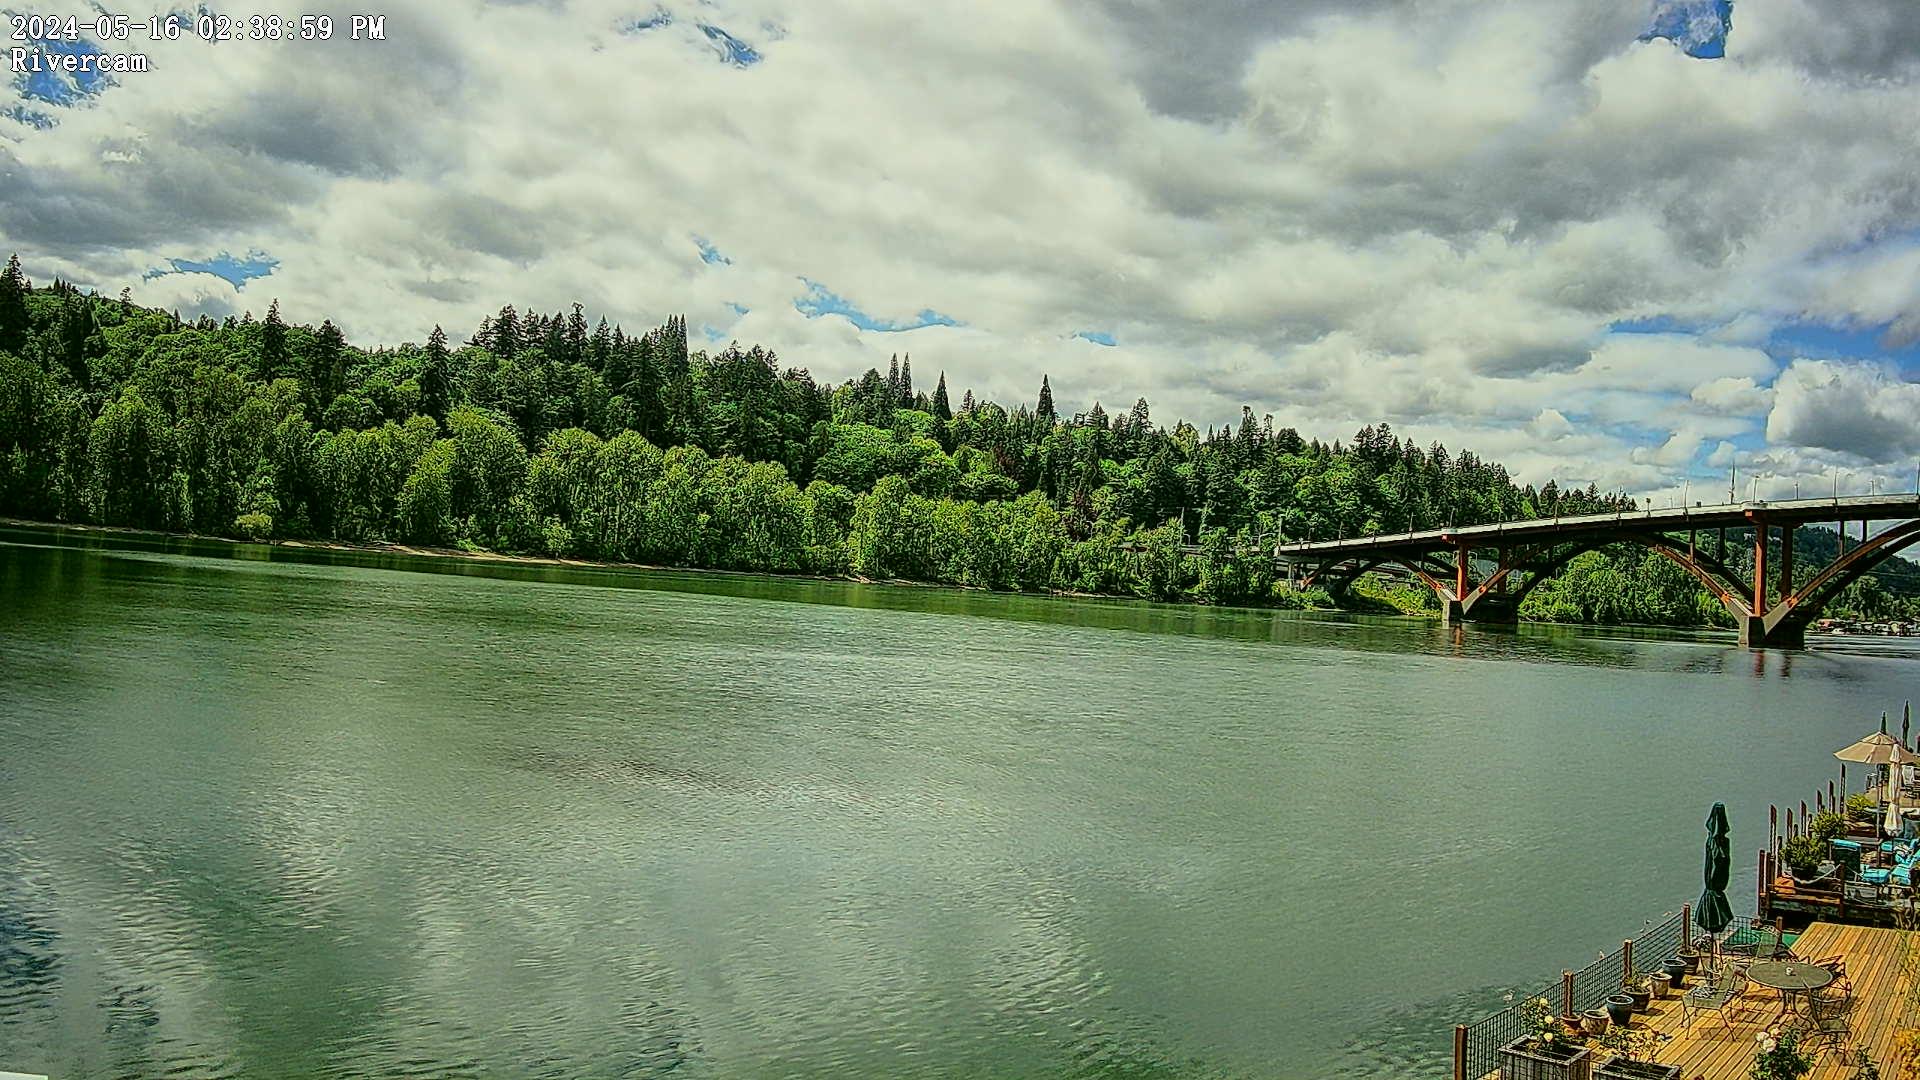 Portland › North-West: Sellwood Bridge - Willamette River Traffic Camera